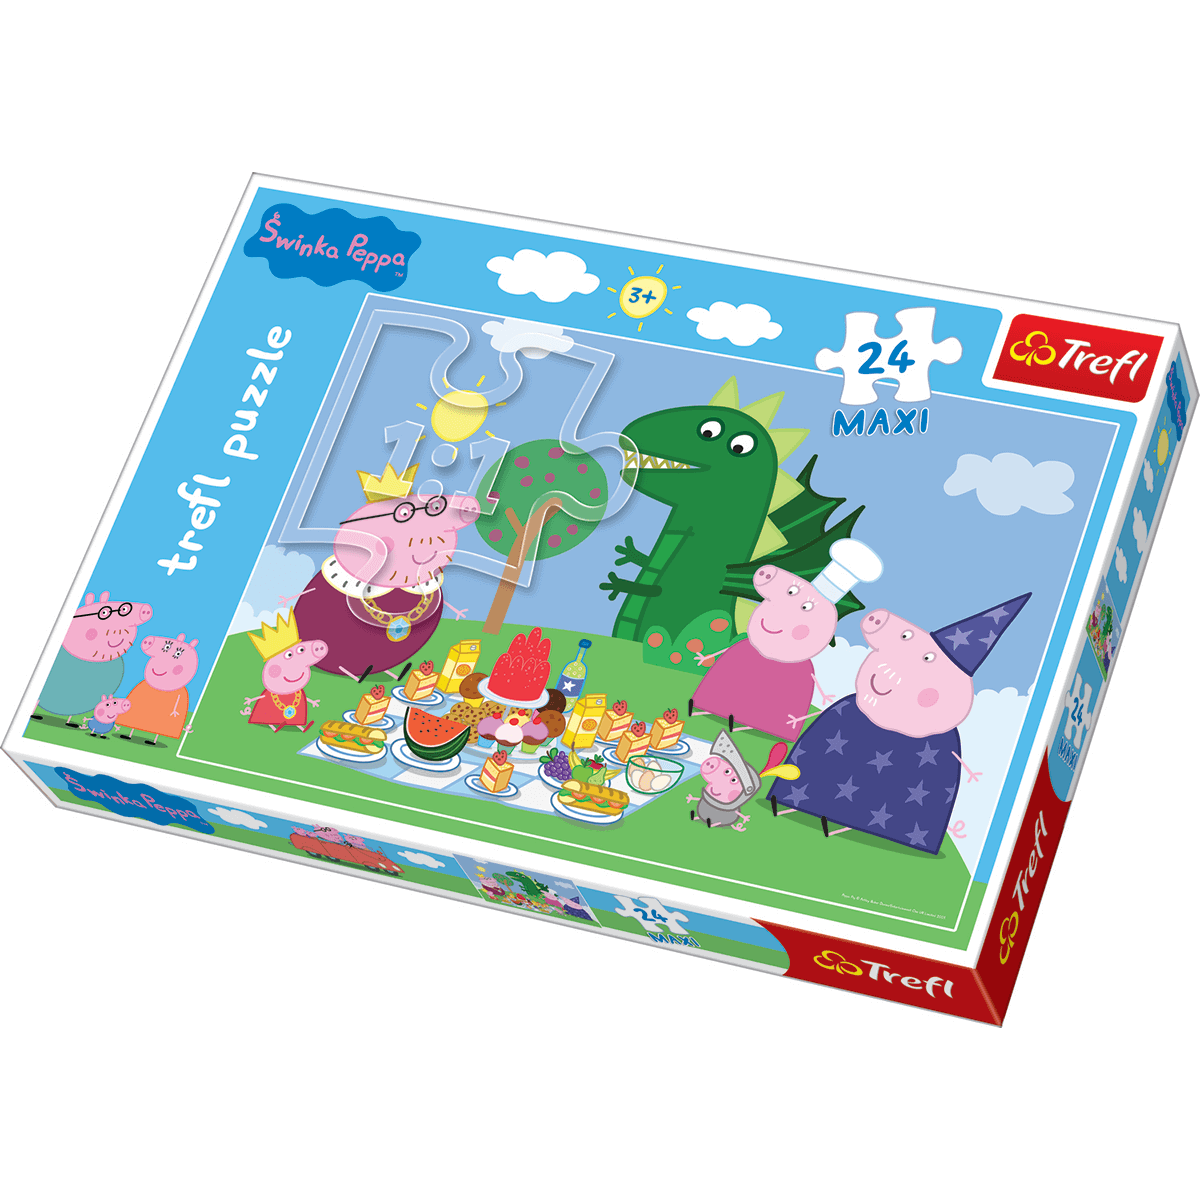 Trefl - Peppa Pig Maxi 24pc Puzzle